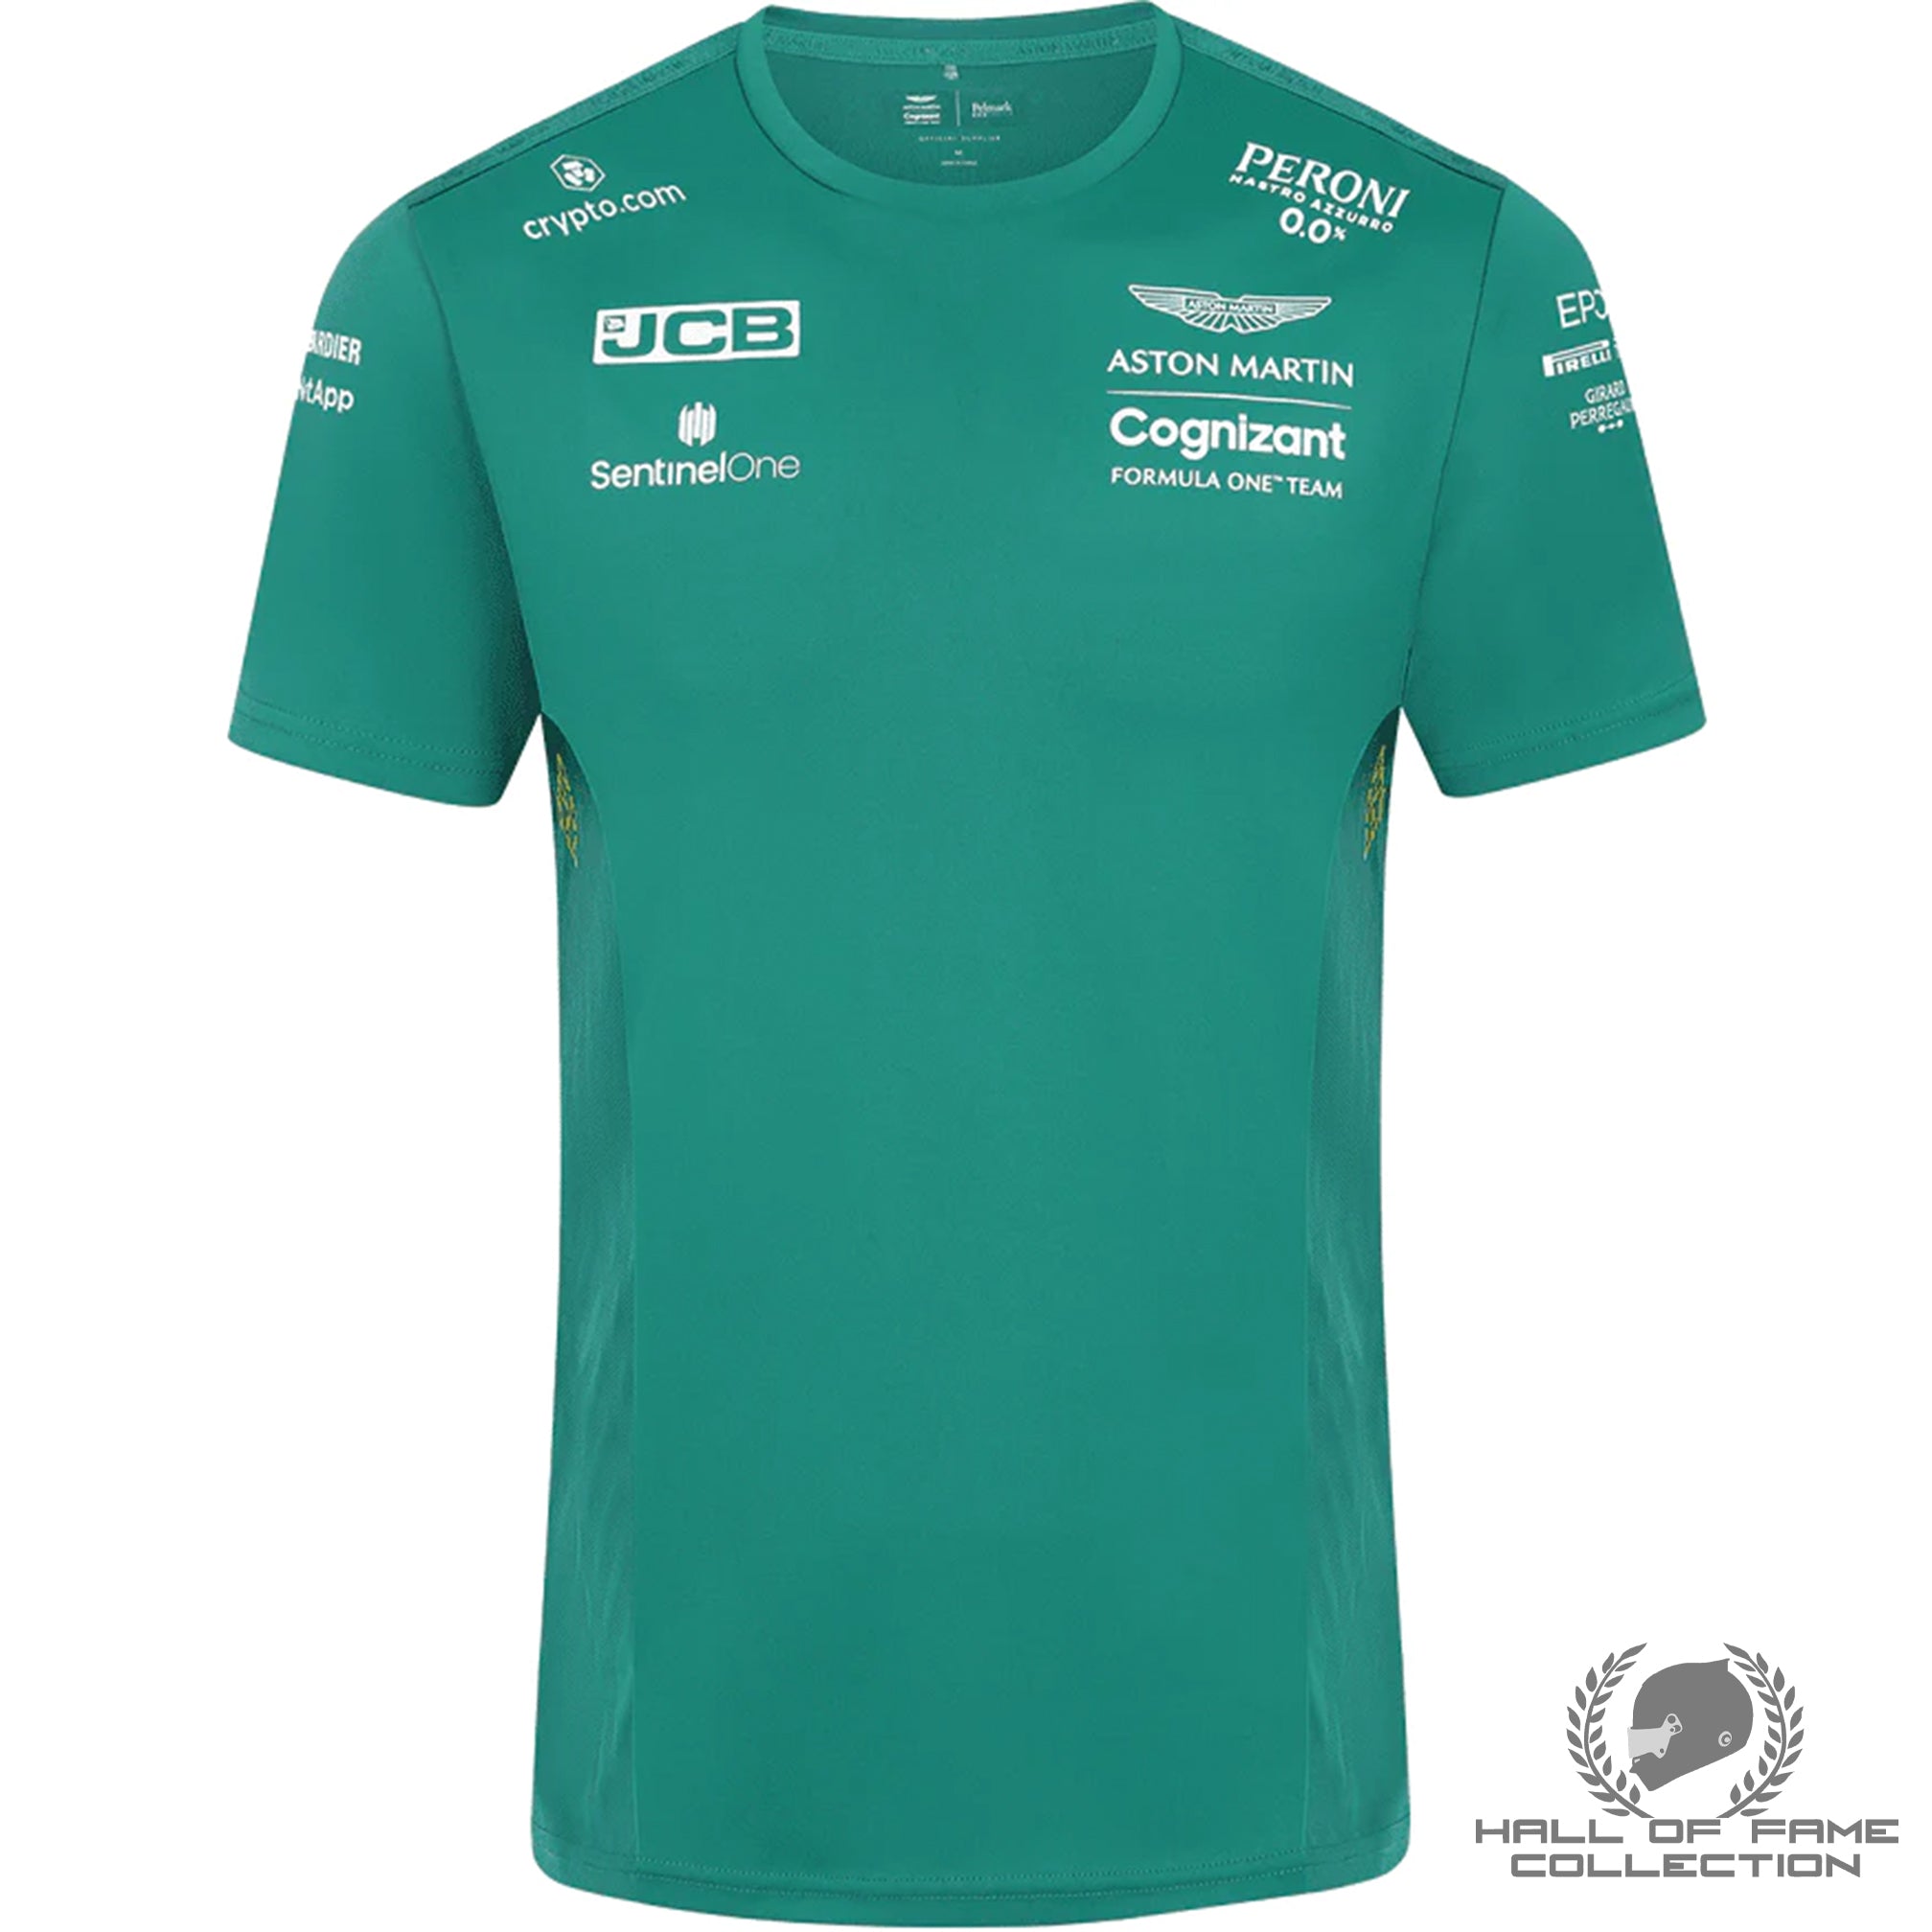 Aston Martin Cognizant F1 Men's Team T-Shirt- Green